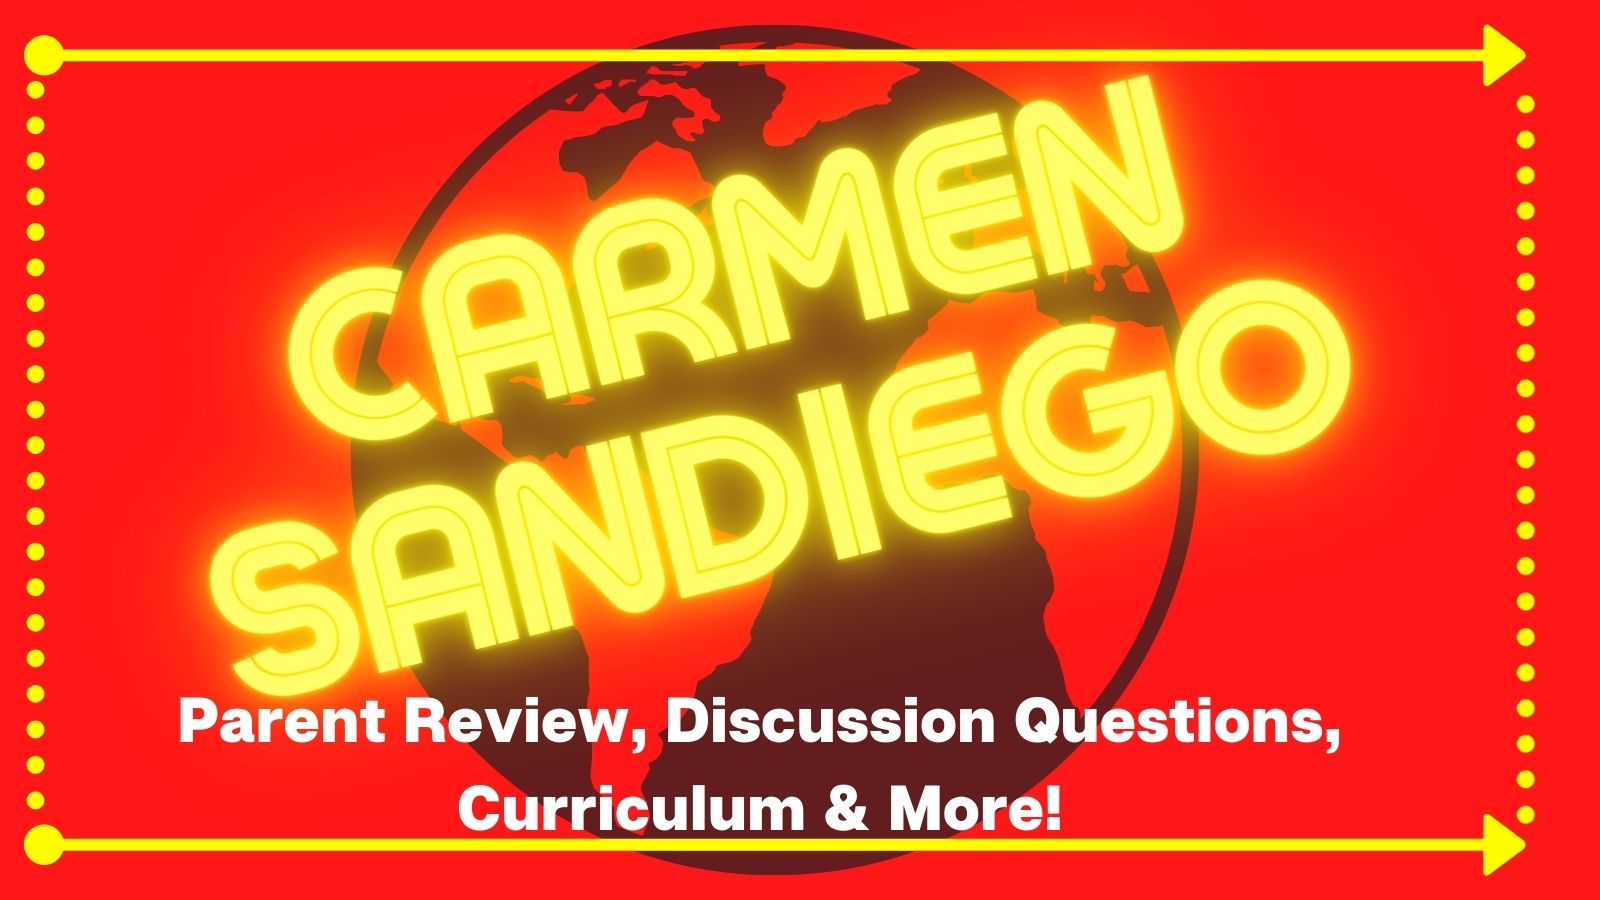 Carmen Sandiego Review